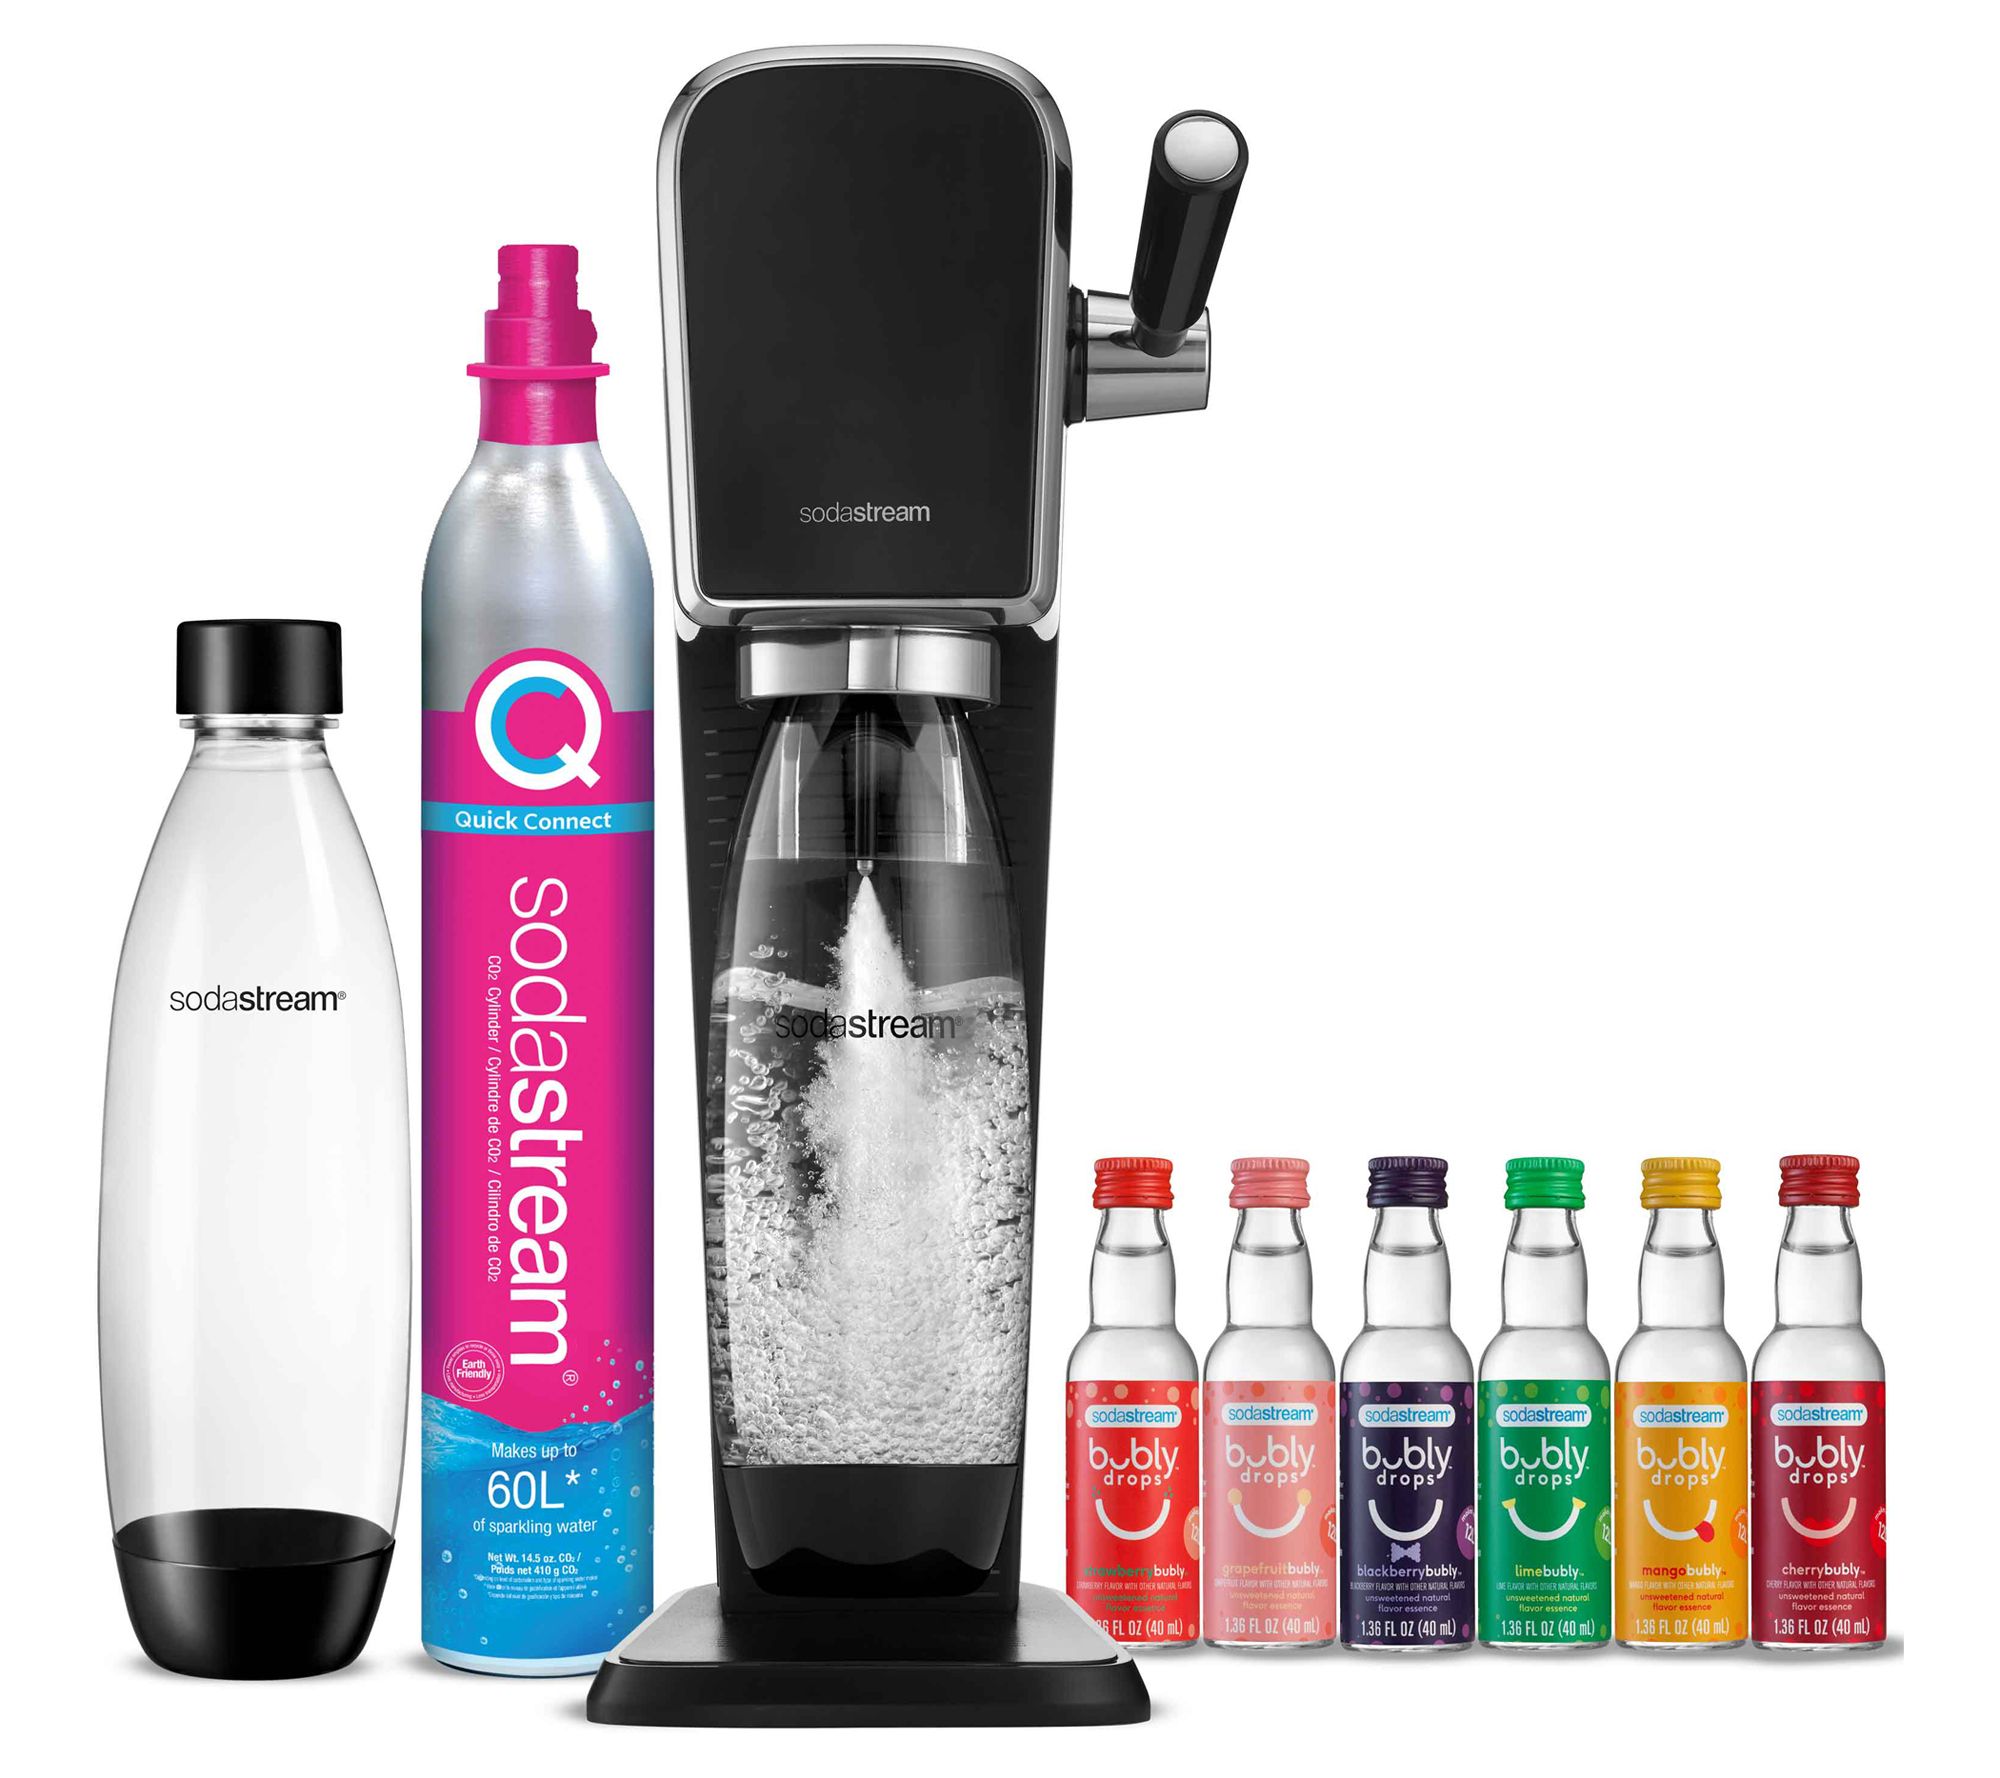 SodaStream Carbonating Bottles & Sparkling Water Maker Accessories